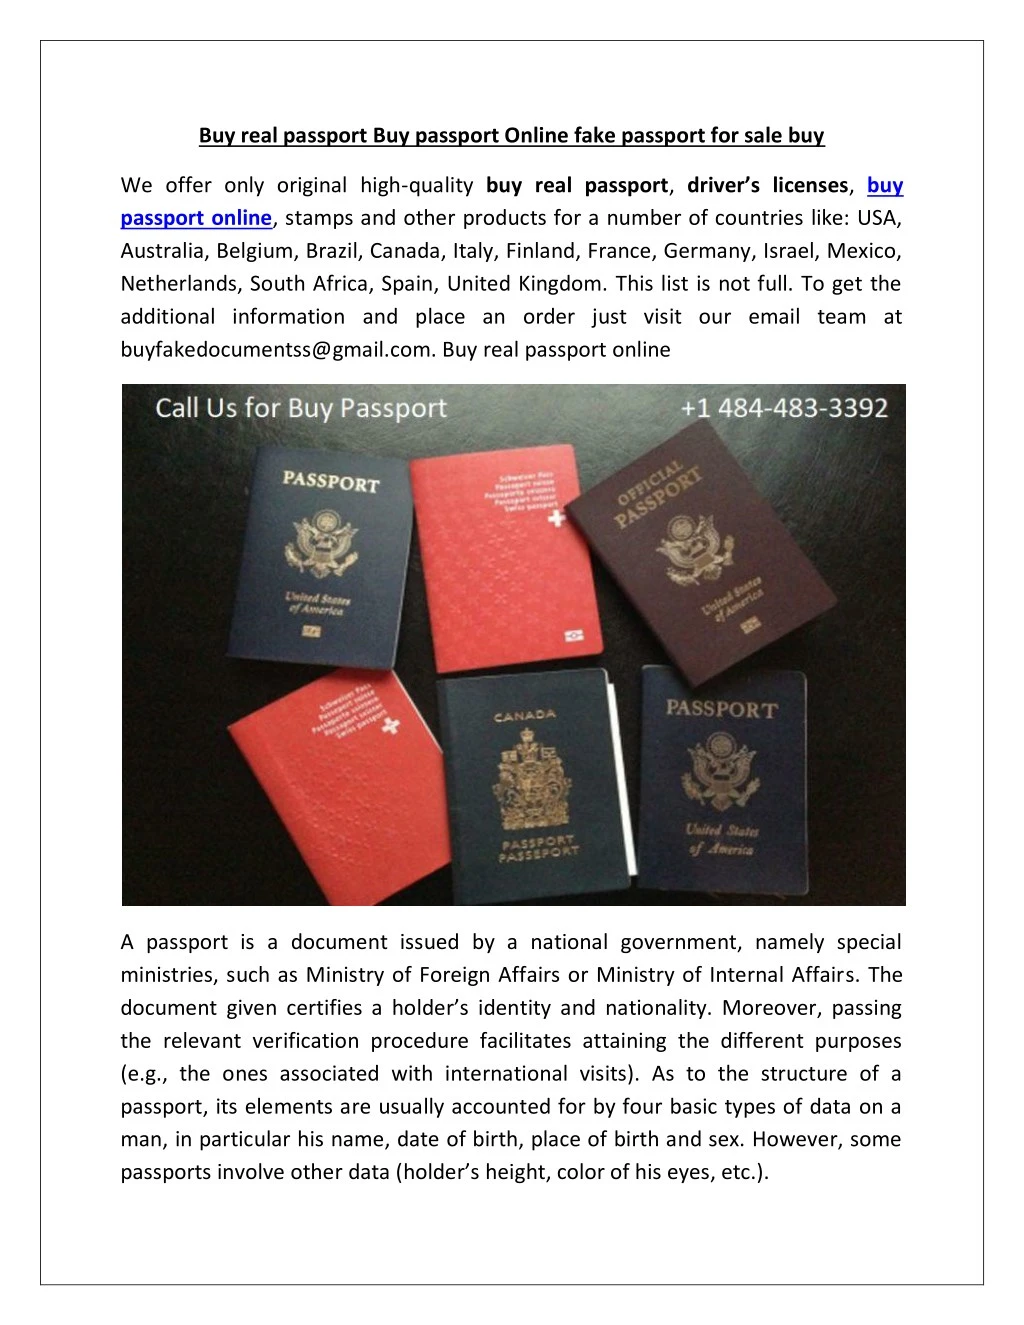 buy real passport buy passport online fake